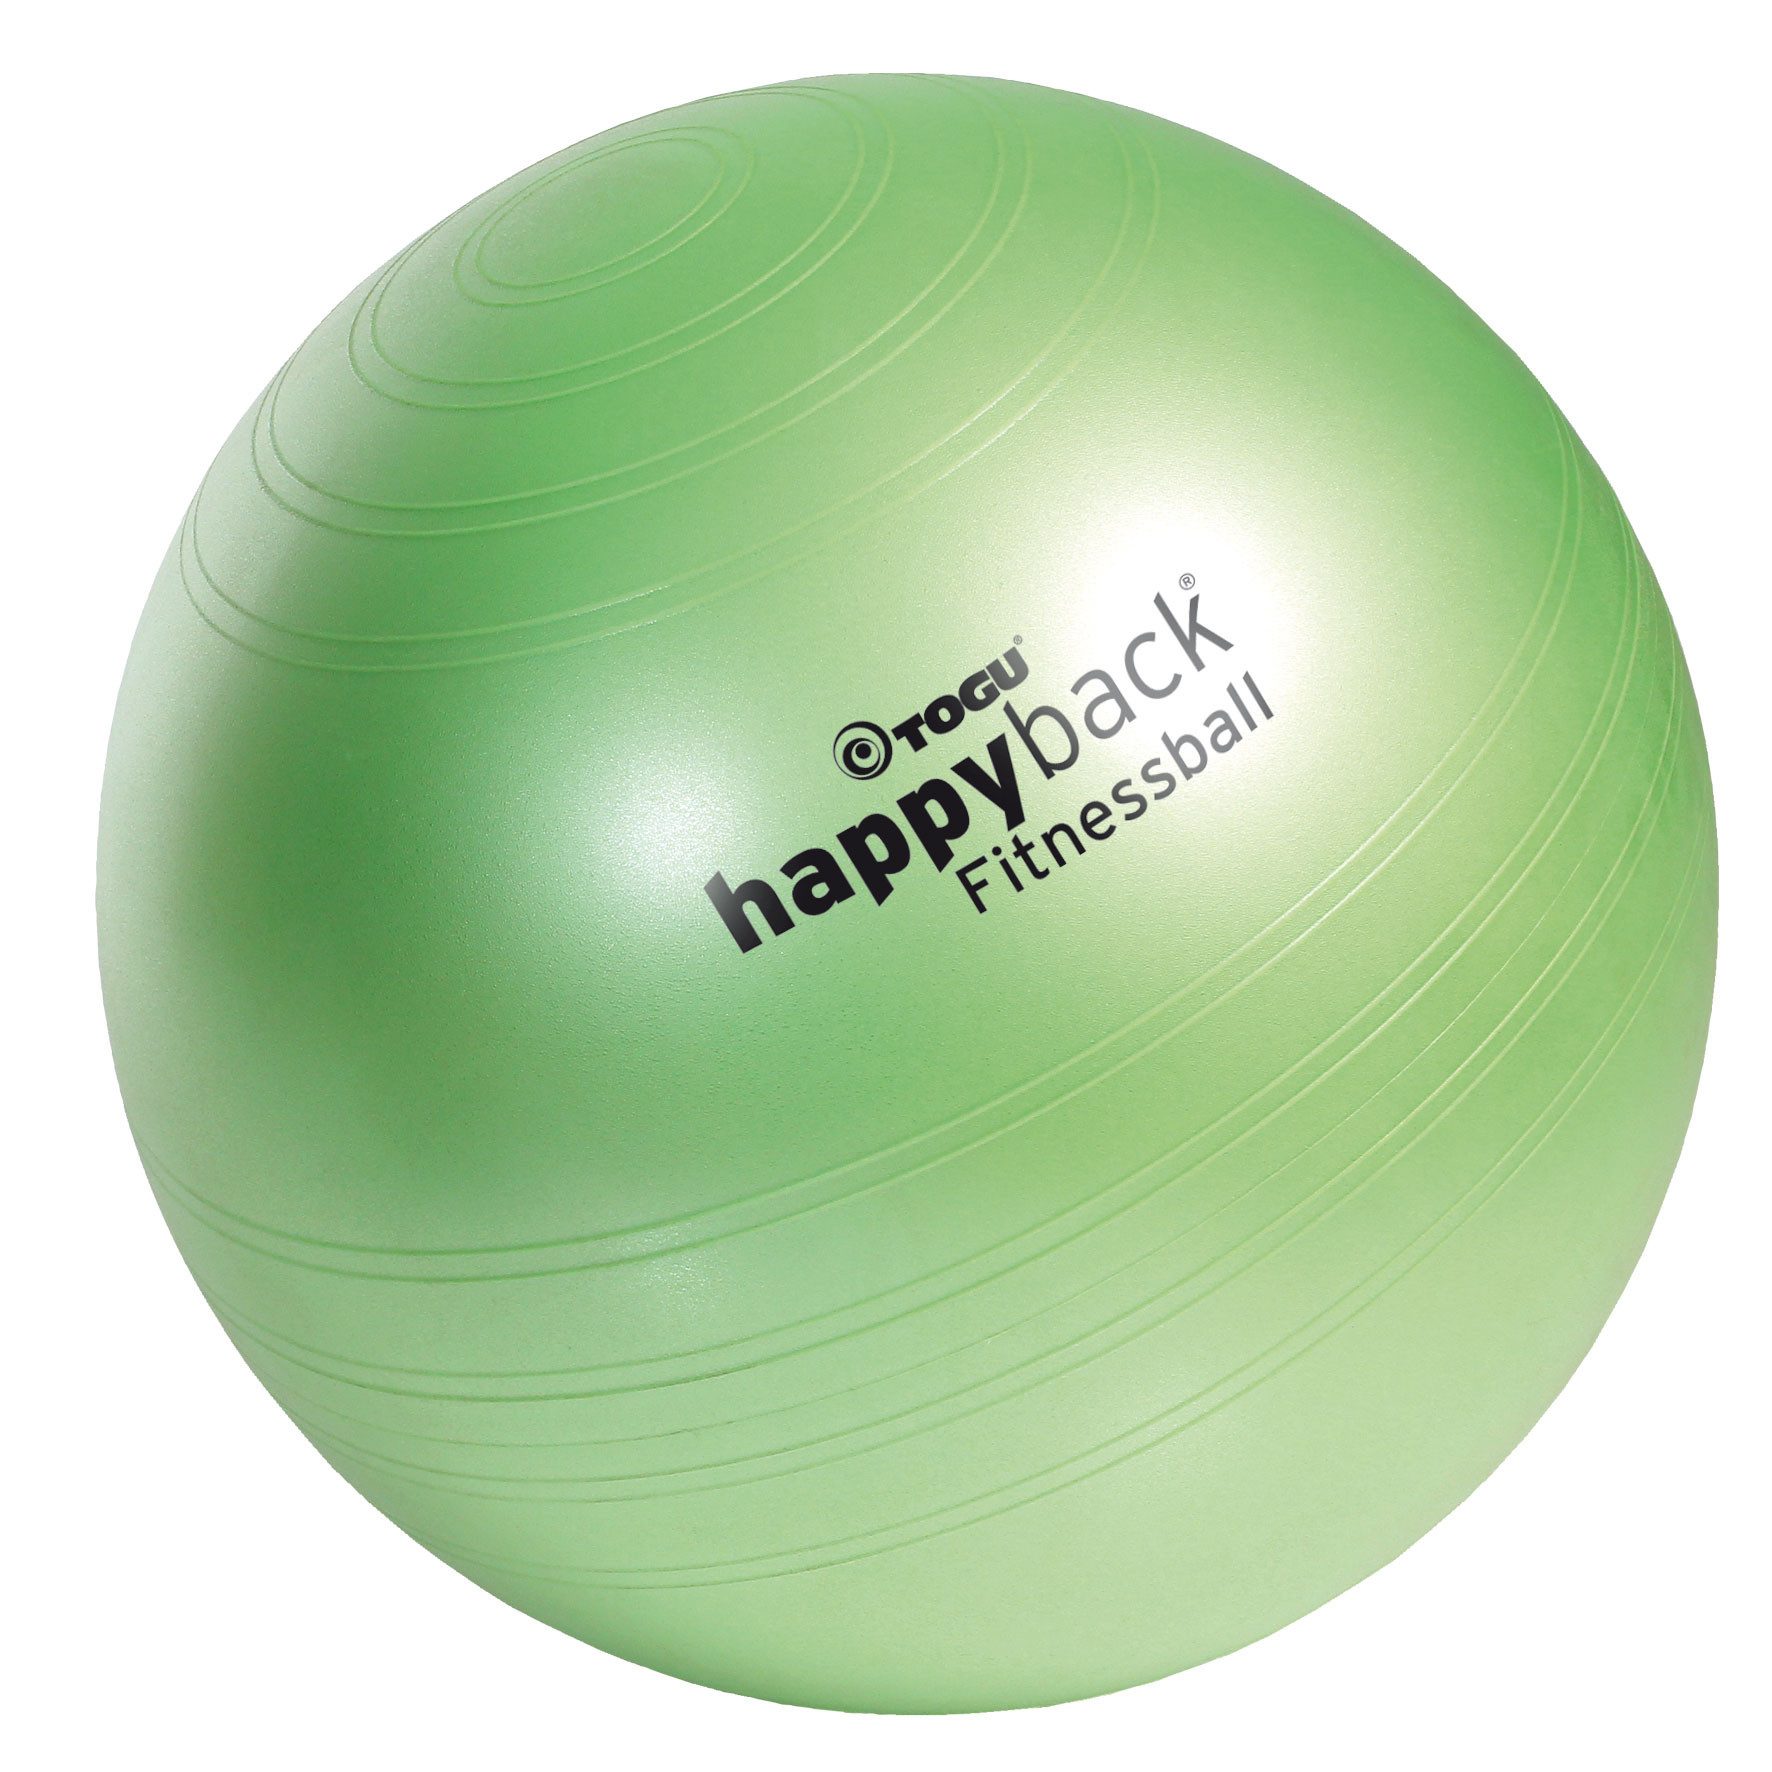 Togu Gymnastikball Togu Happyback® Fitnessball grün